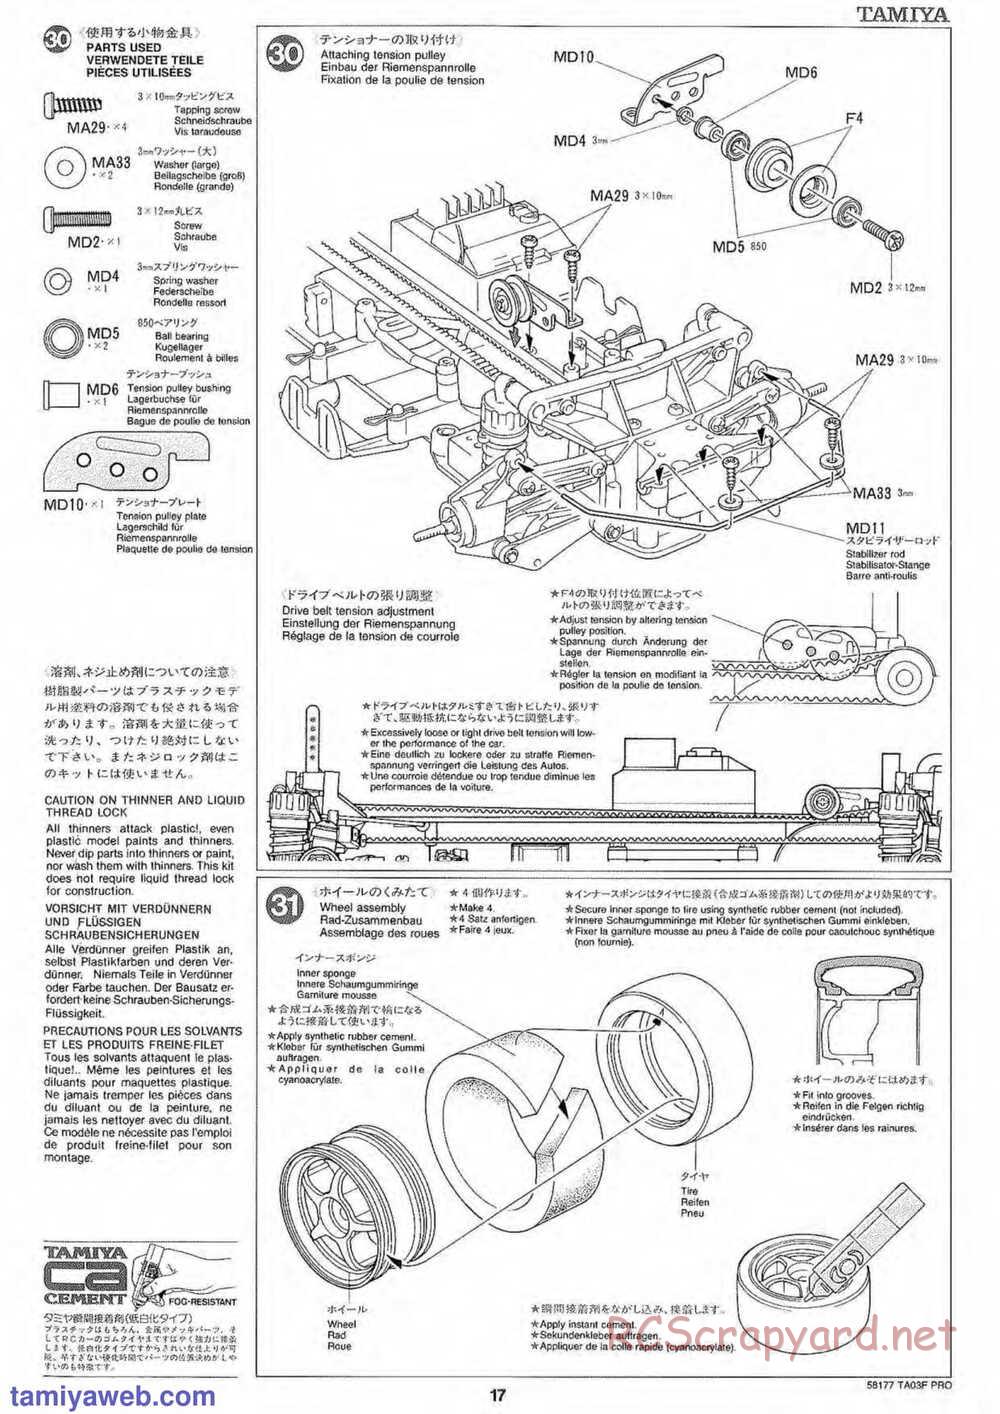 Tamiya - TA-03F Pro Chassis - Manual - Page 17